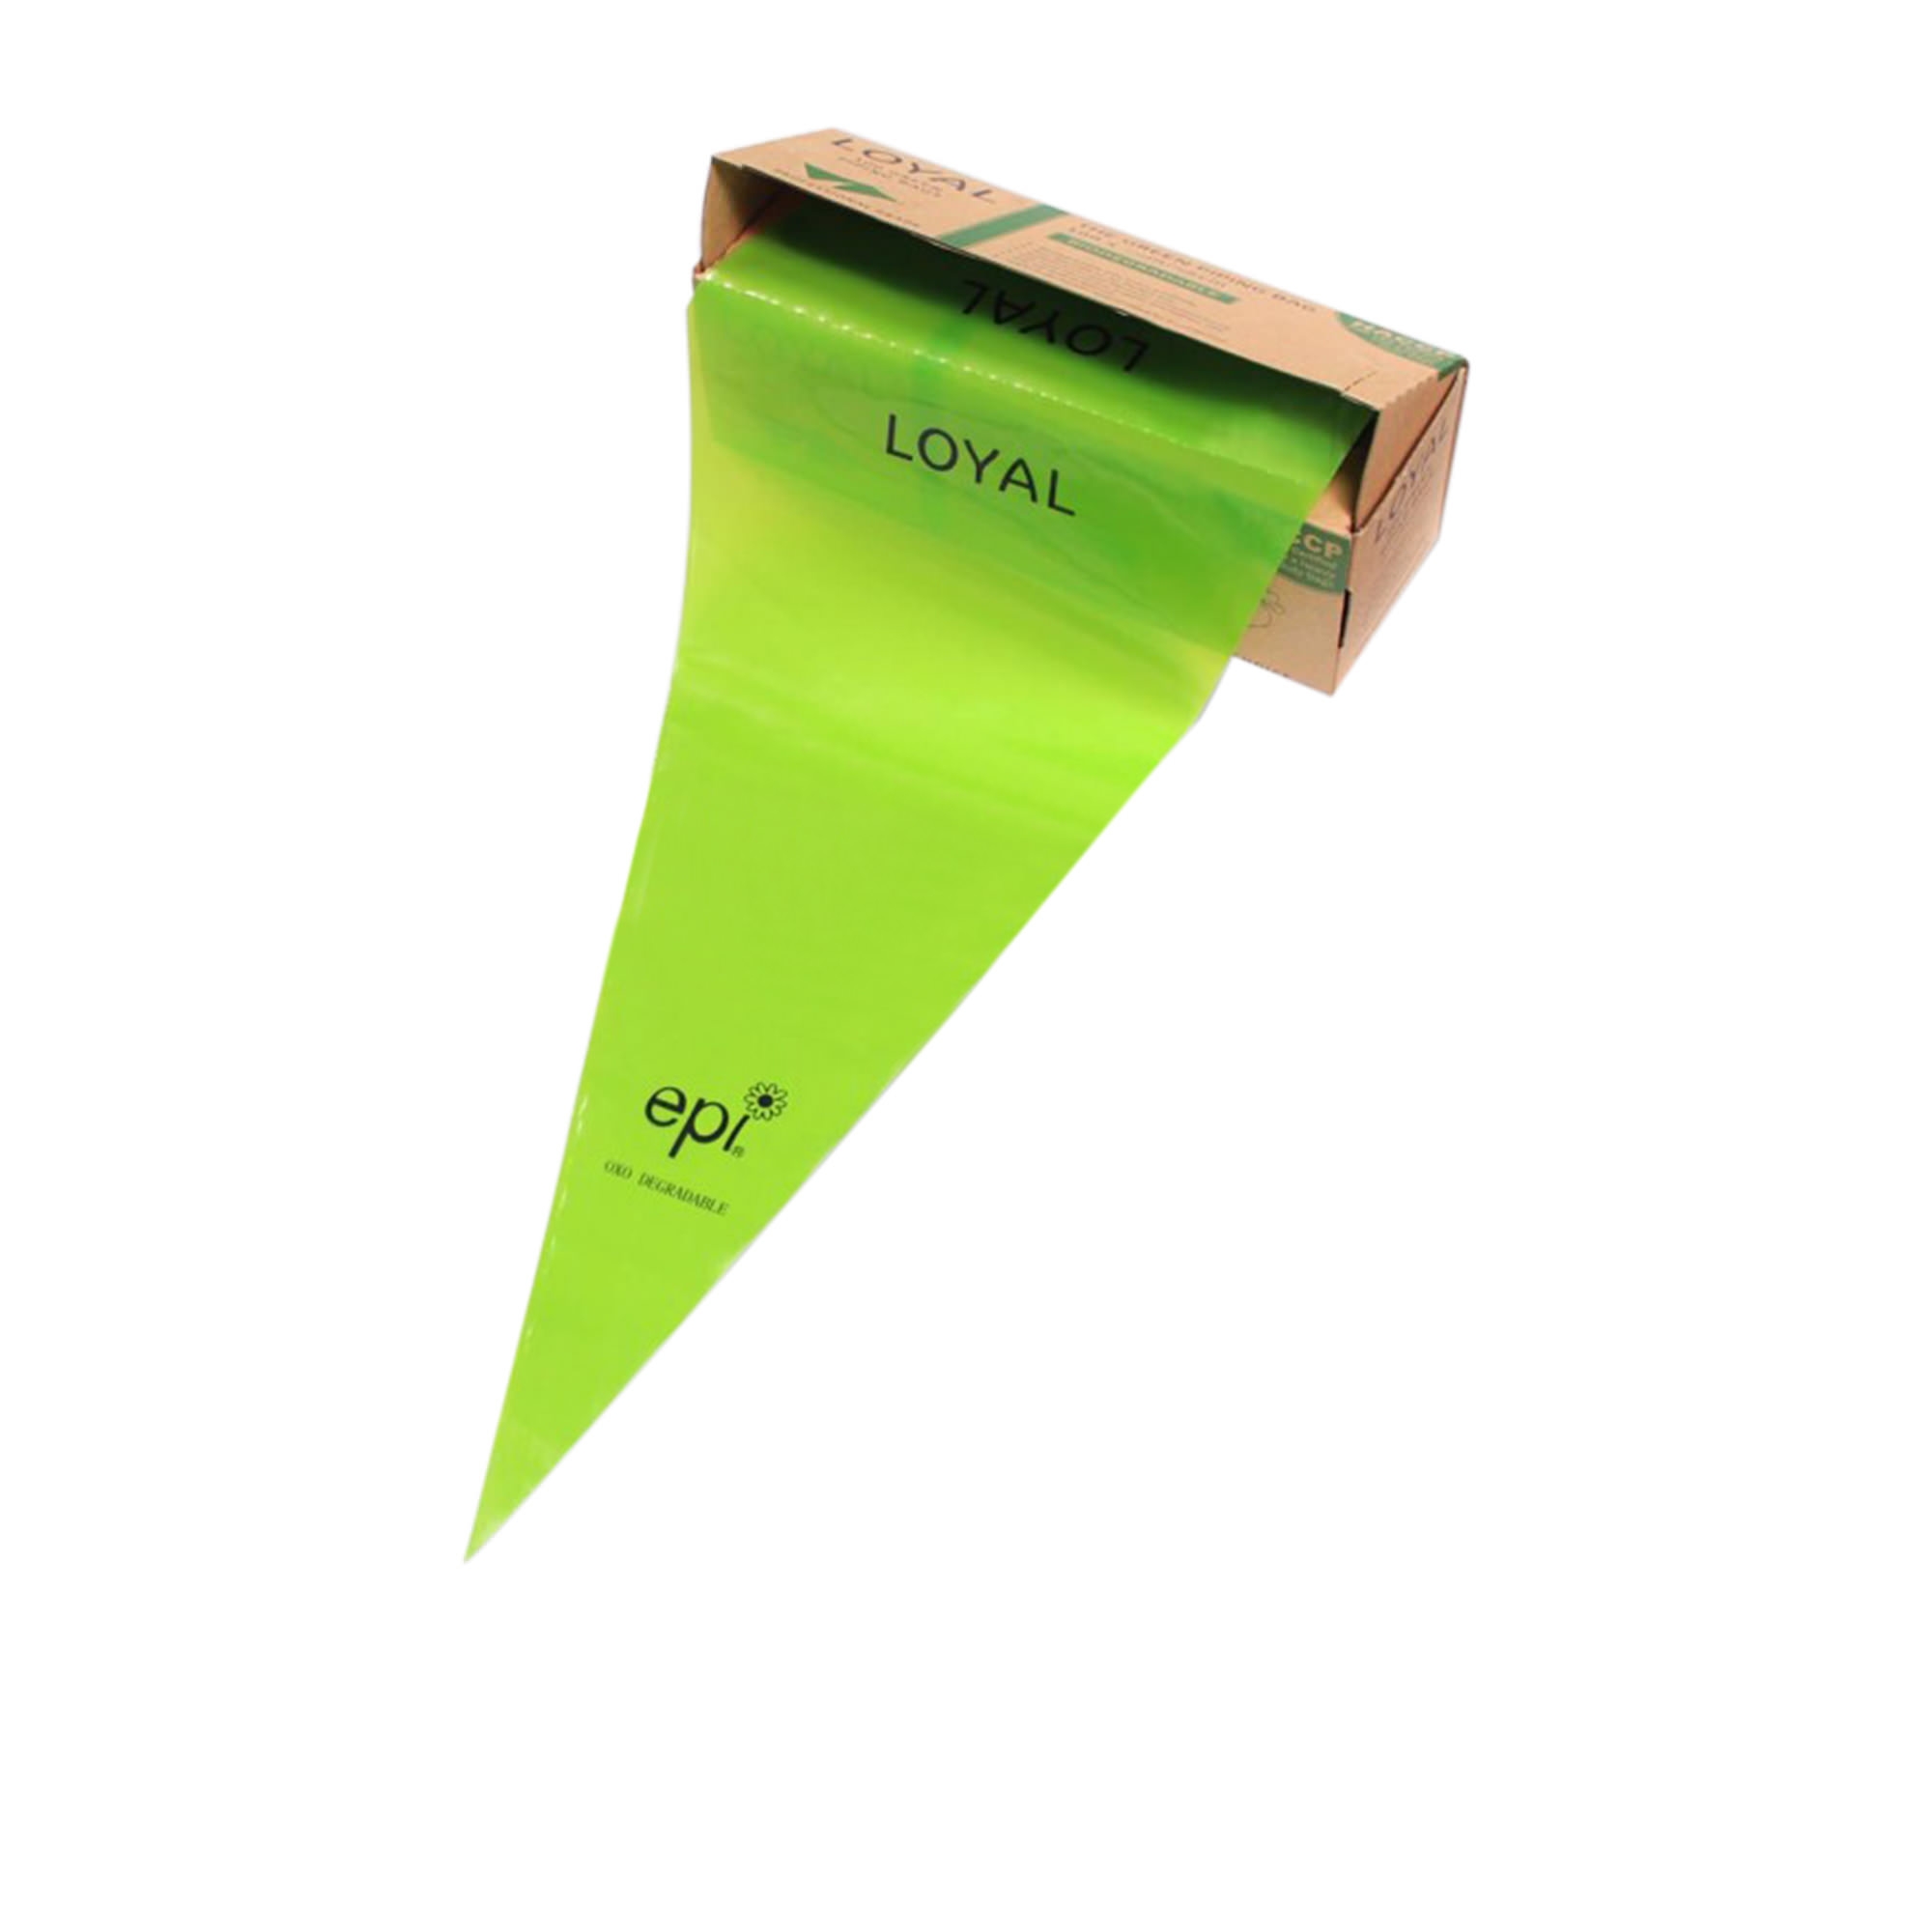 Loyal Biodegradable Disposable Piping Bag 46cm Green Image 1